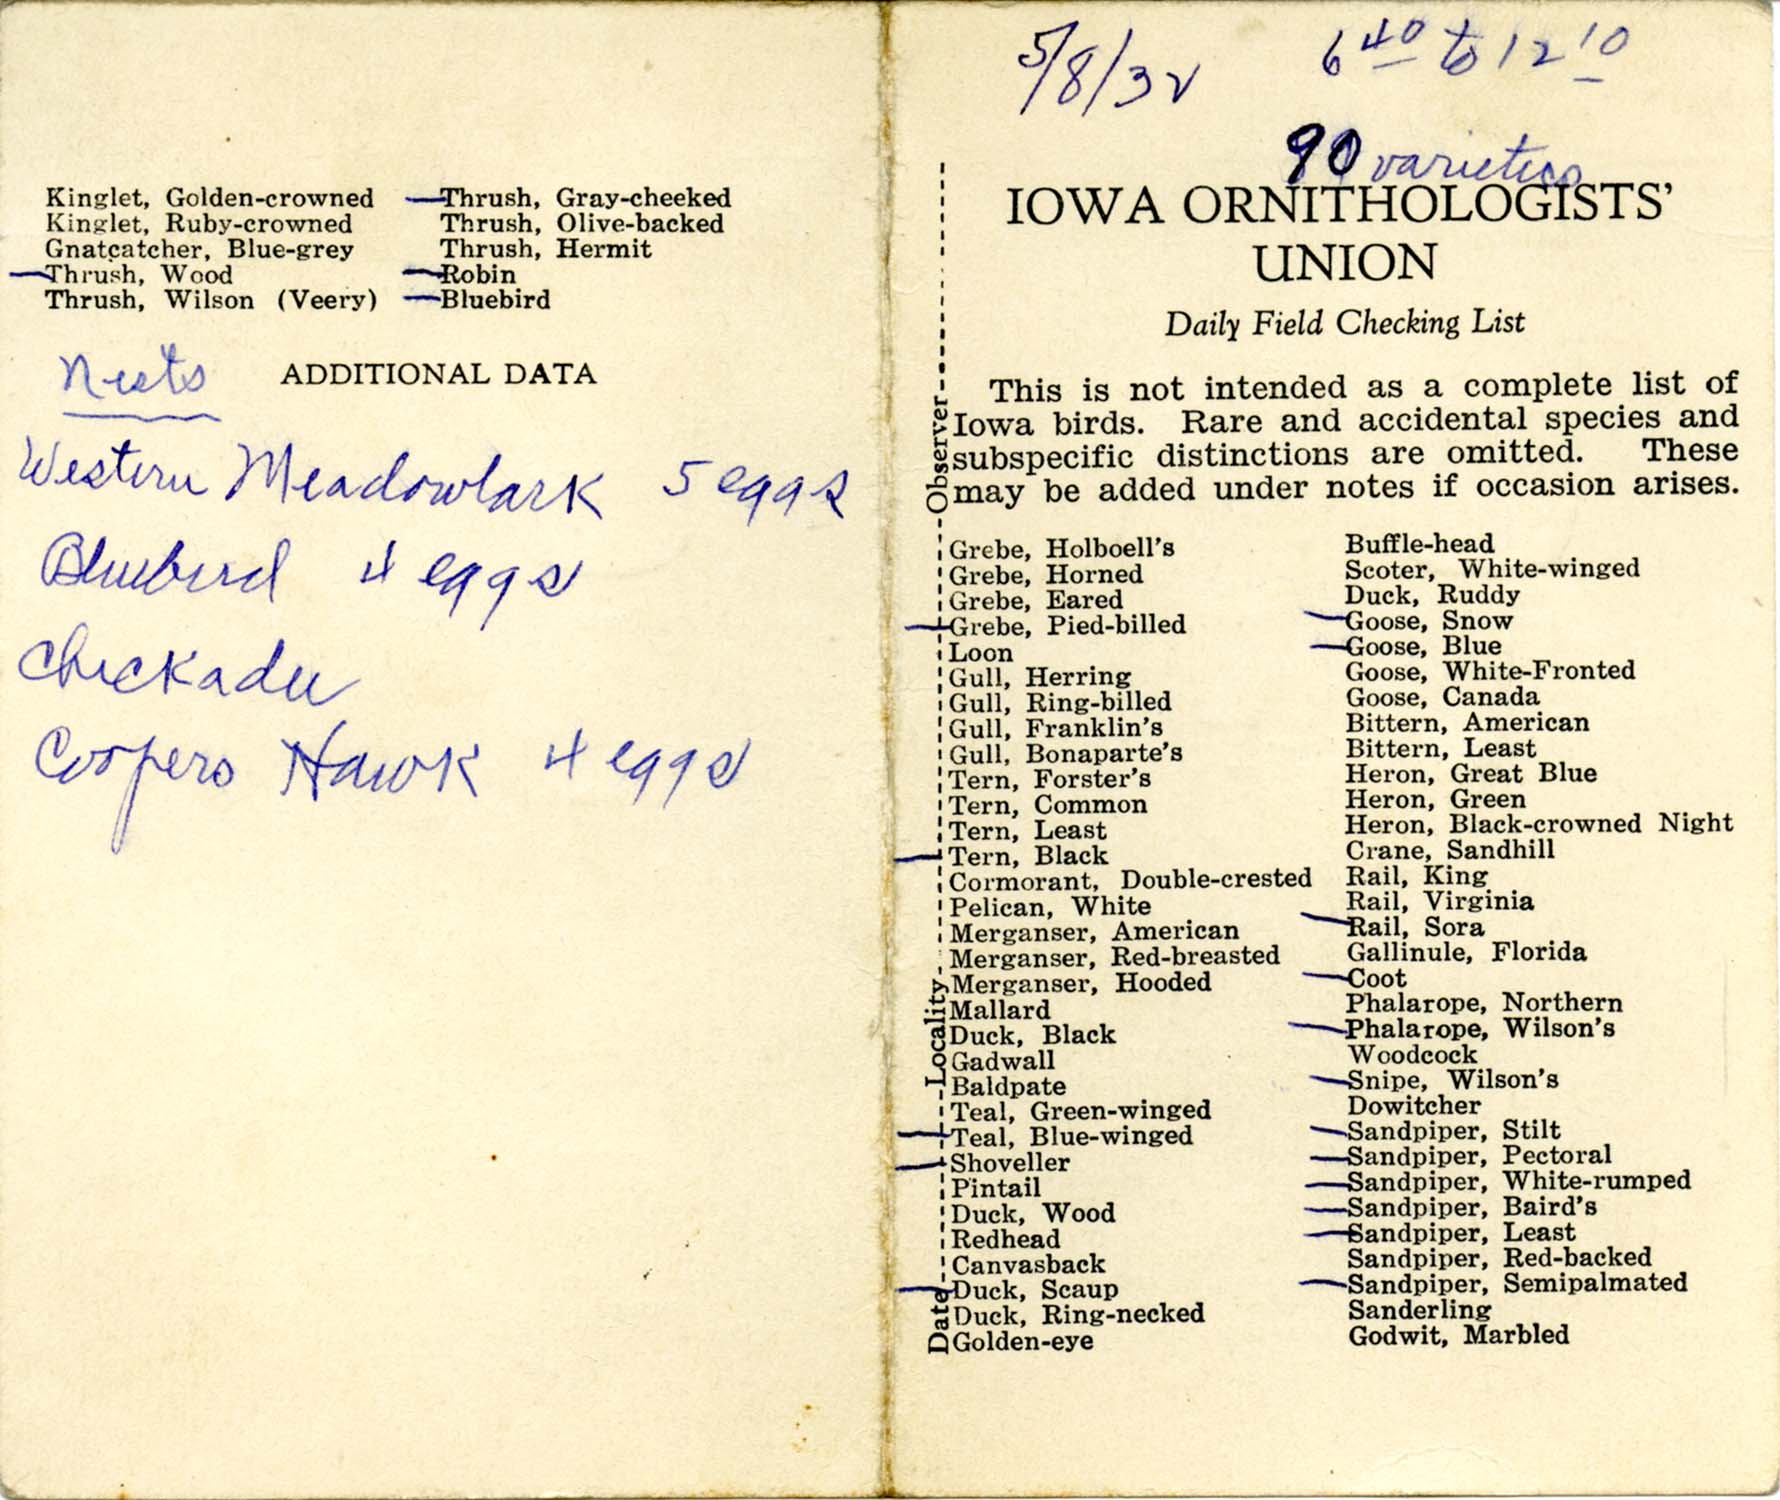 Daily field checking list, Walter Rosene, May 8, 1932 copy